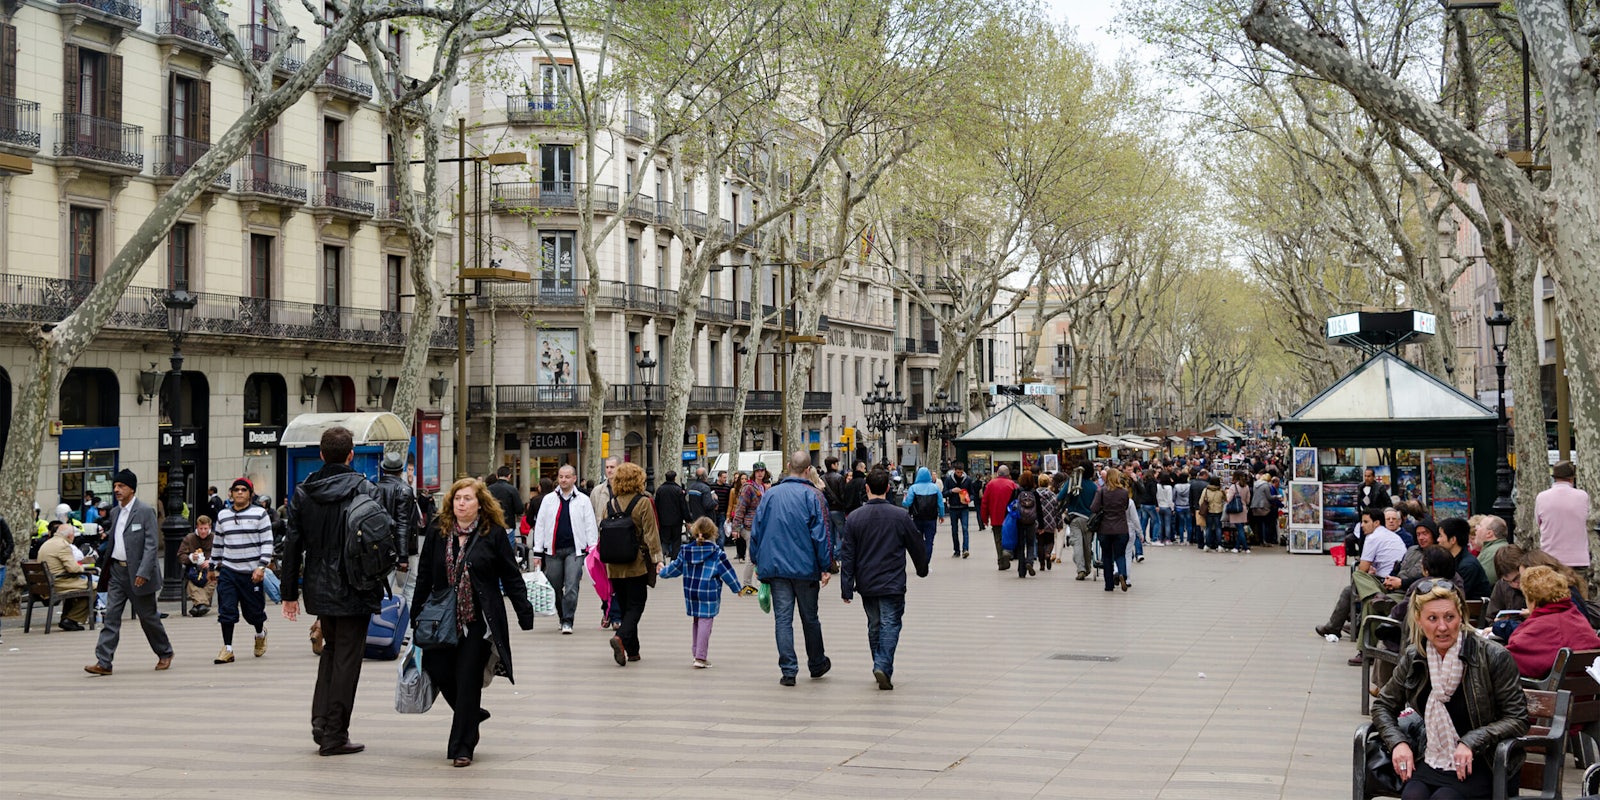 People walking in 'Las Ramblas', Barcelona